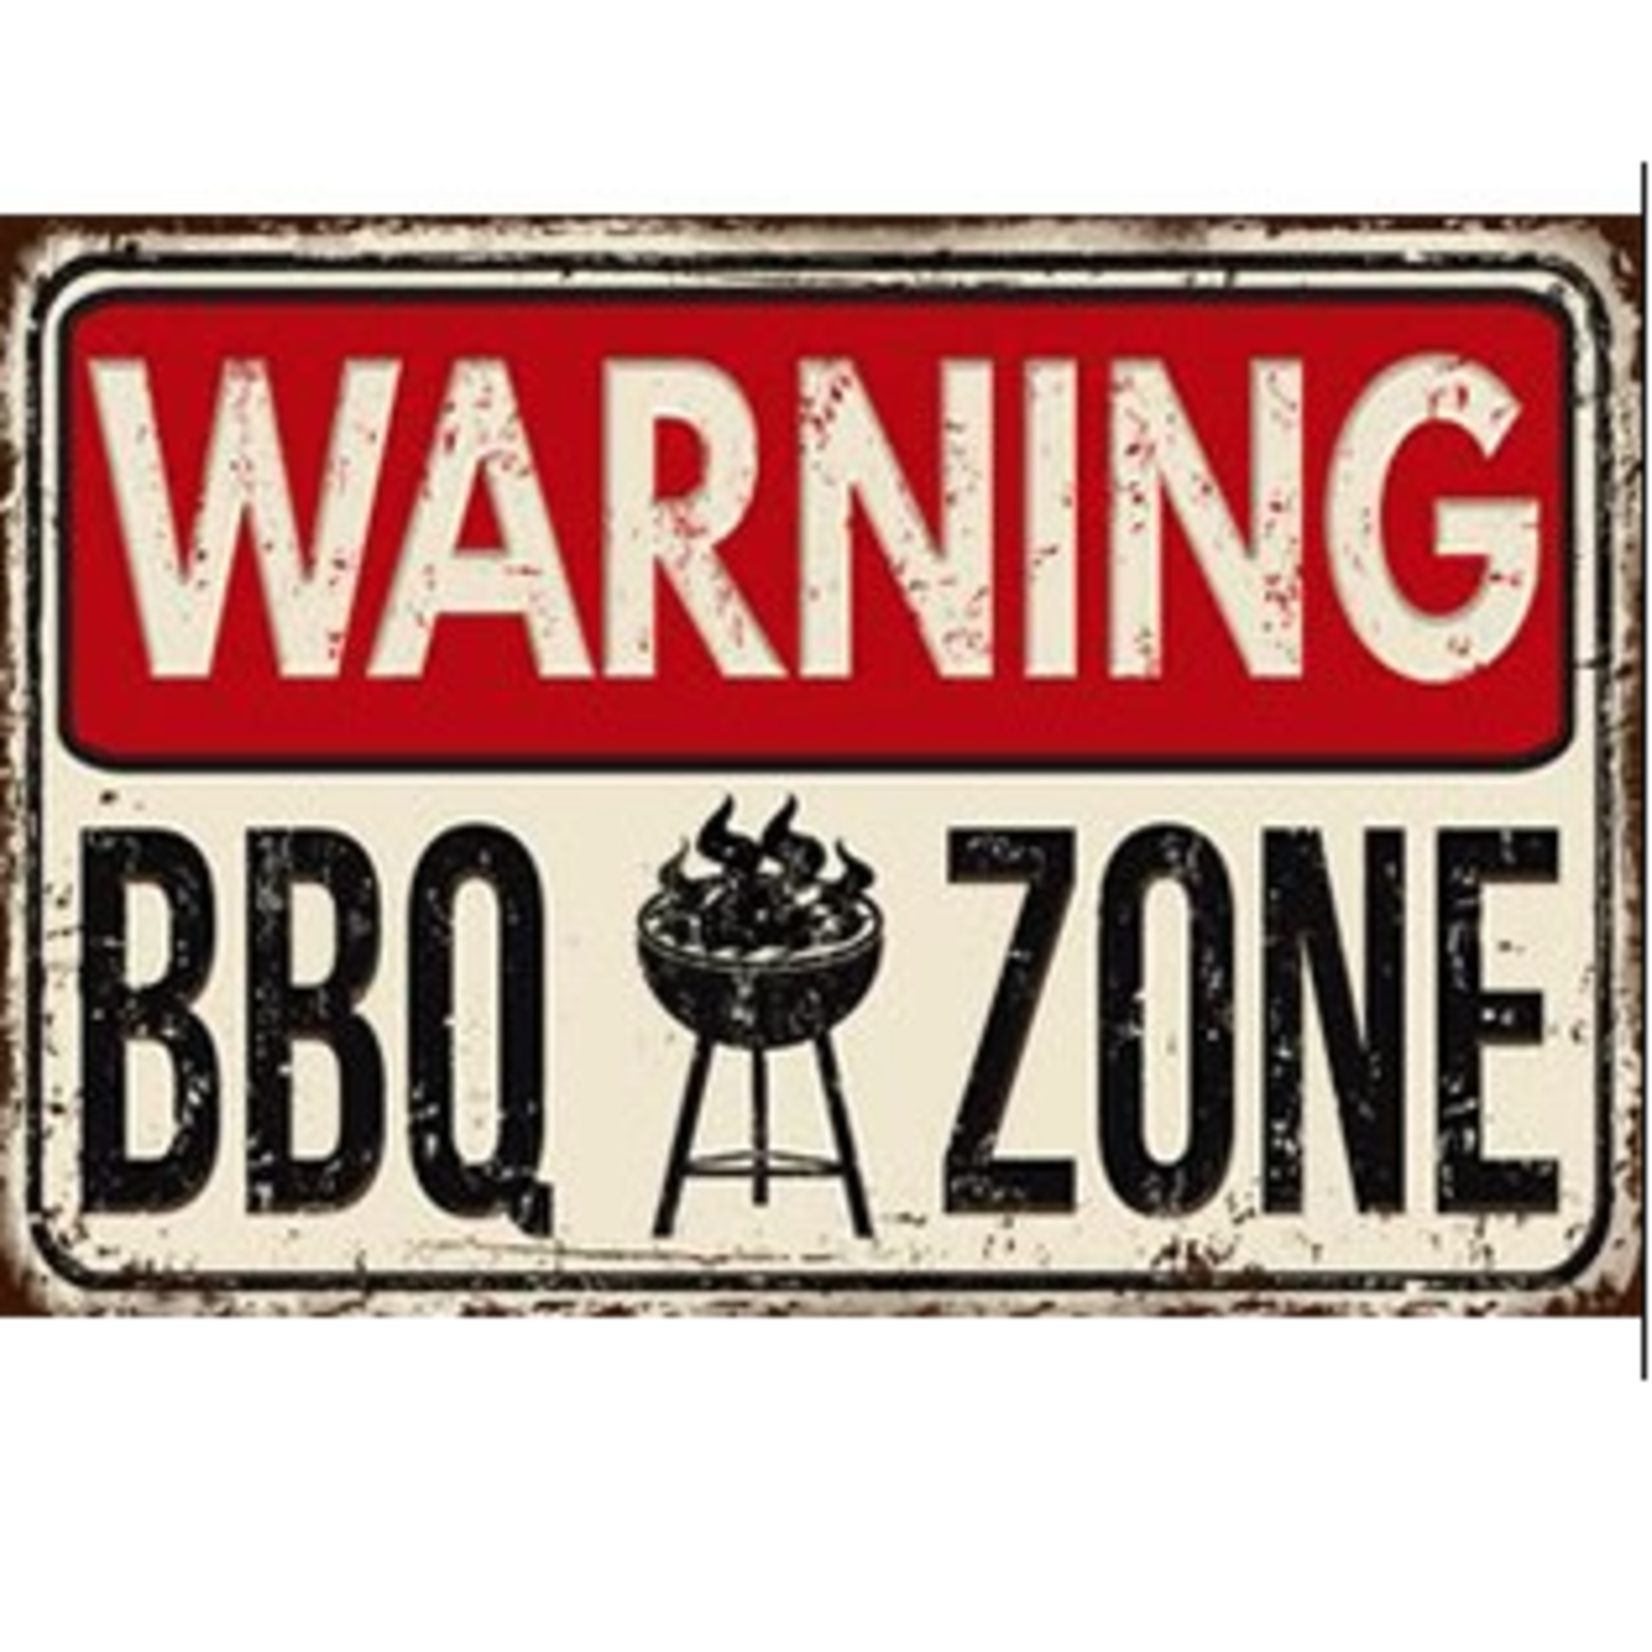 Warning BBQ Zone Metal Sign